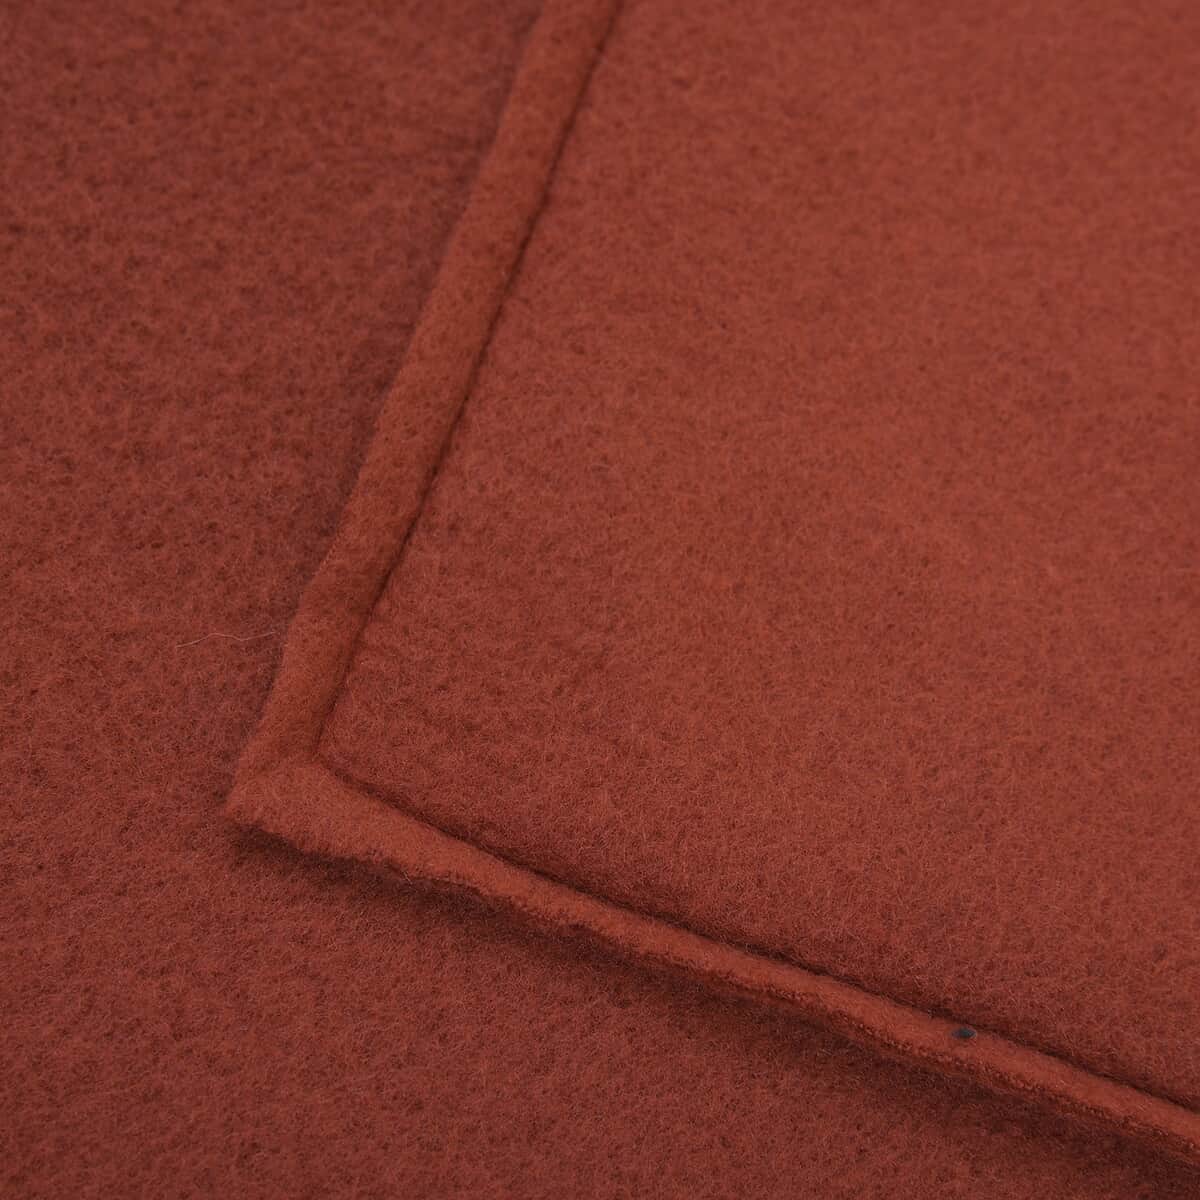 Homesmart 2 in 1 Red Solid Fleece Travel Blanket with Folded Storage Pocket (Microfiber) image number 2